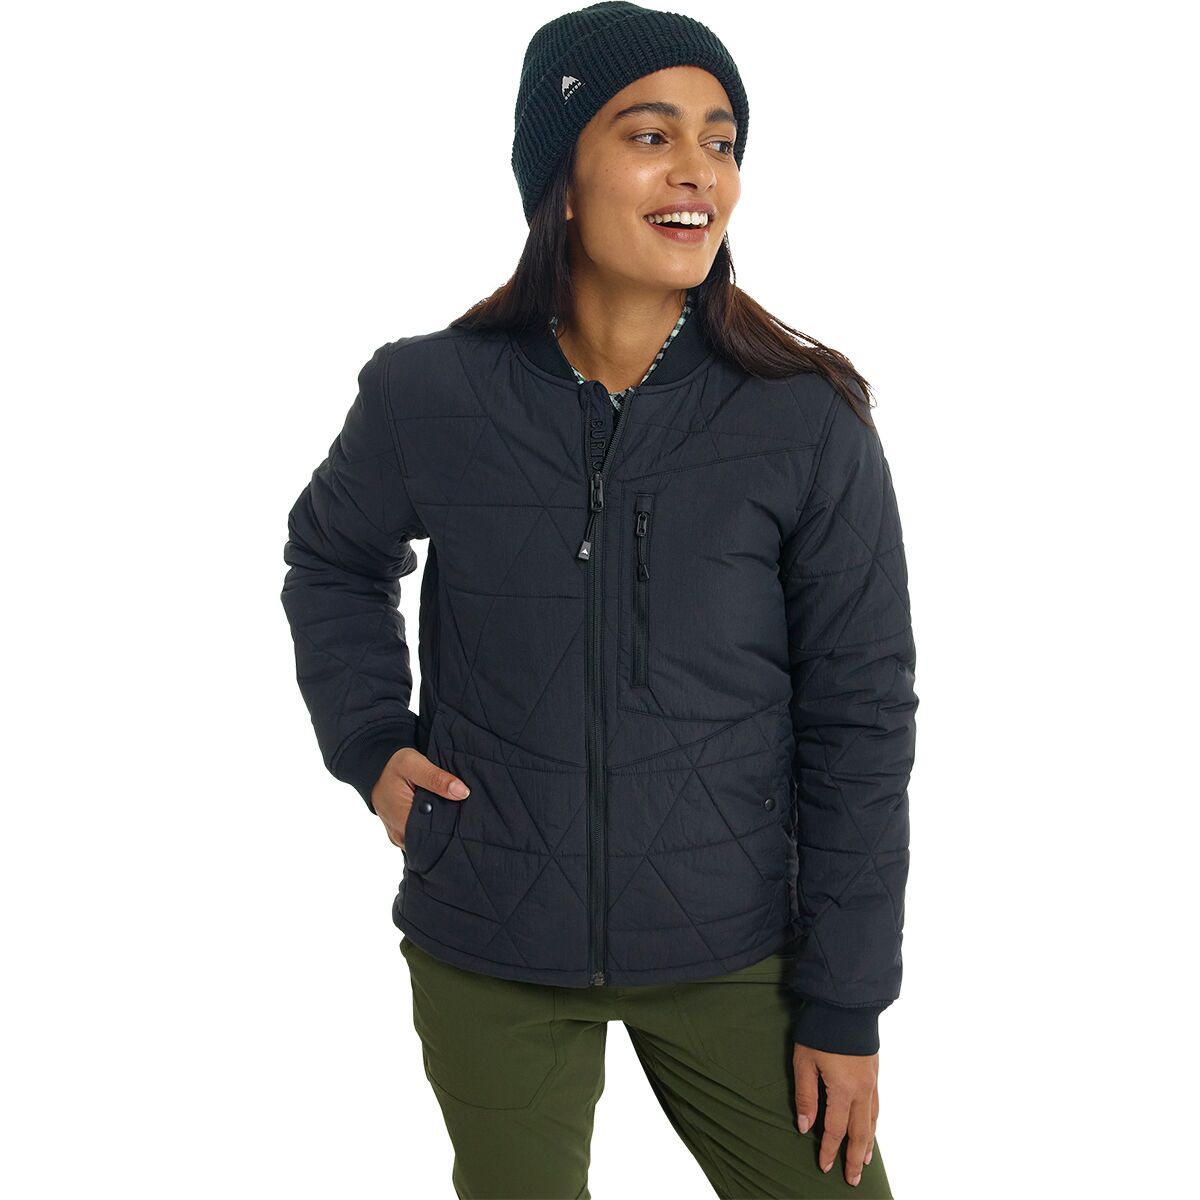 Versatile Heat Insulated Jacket - Women